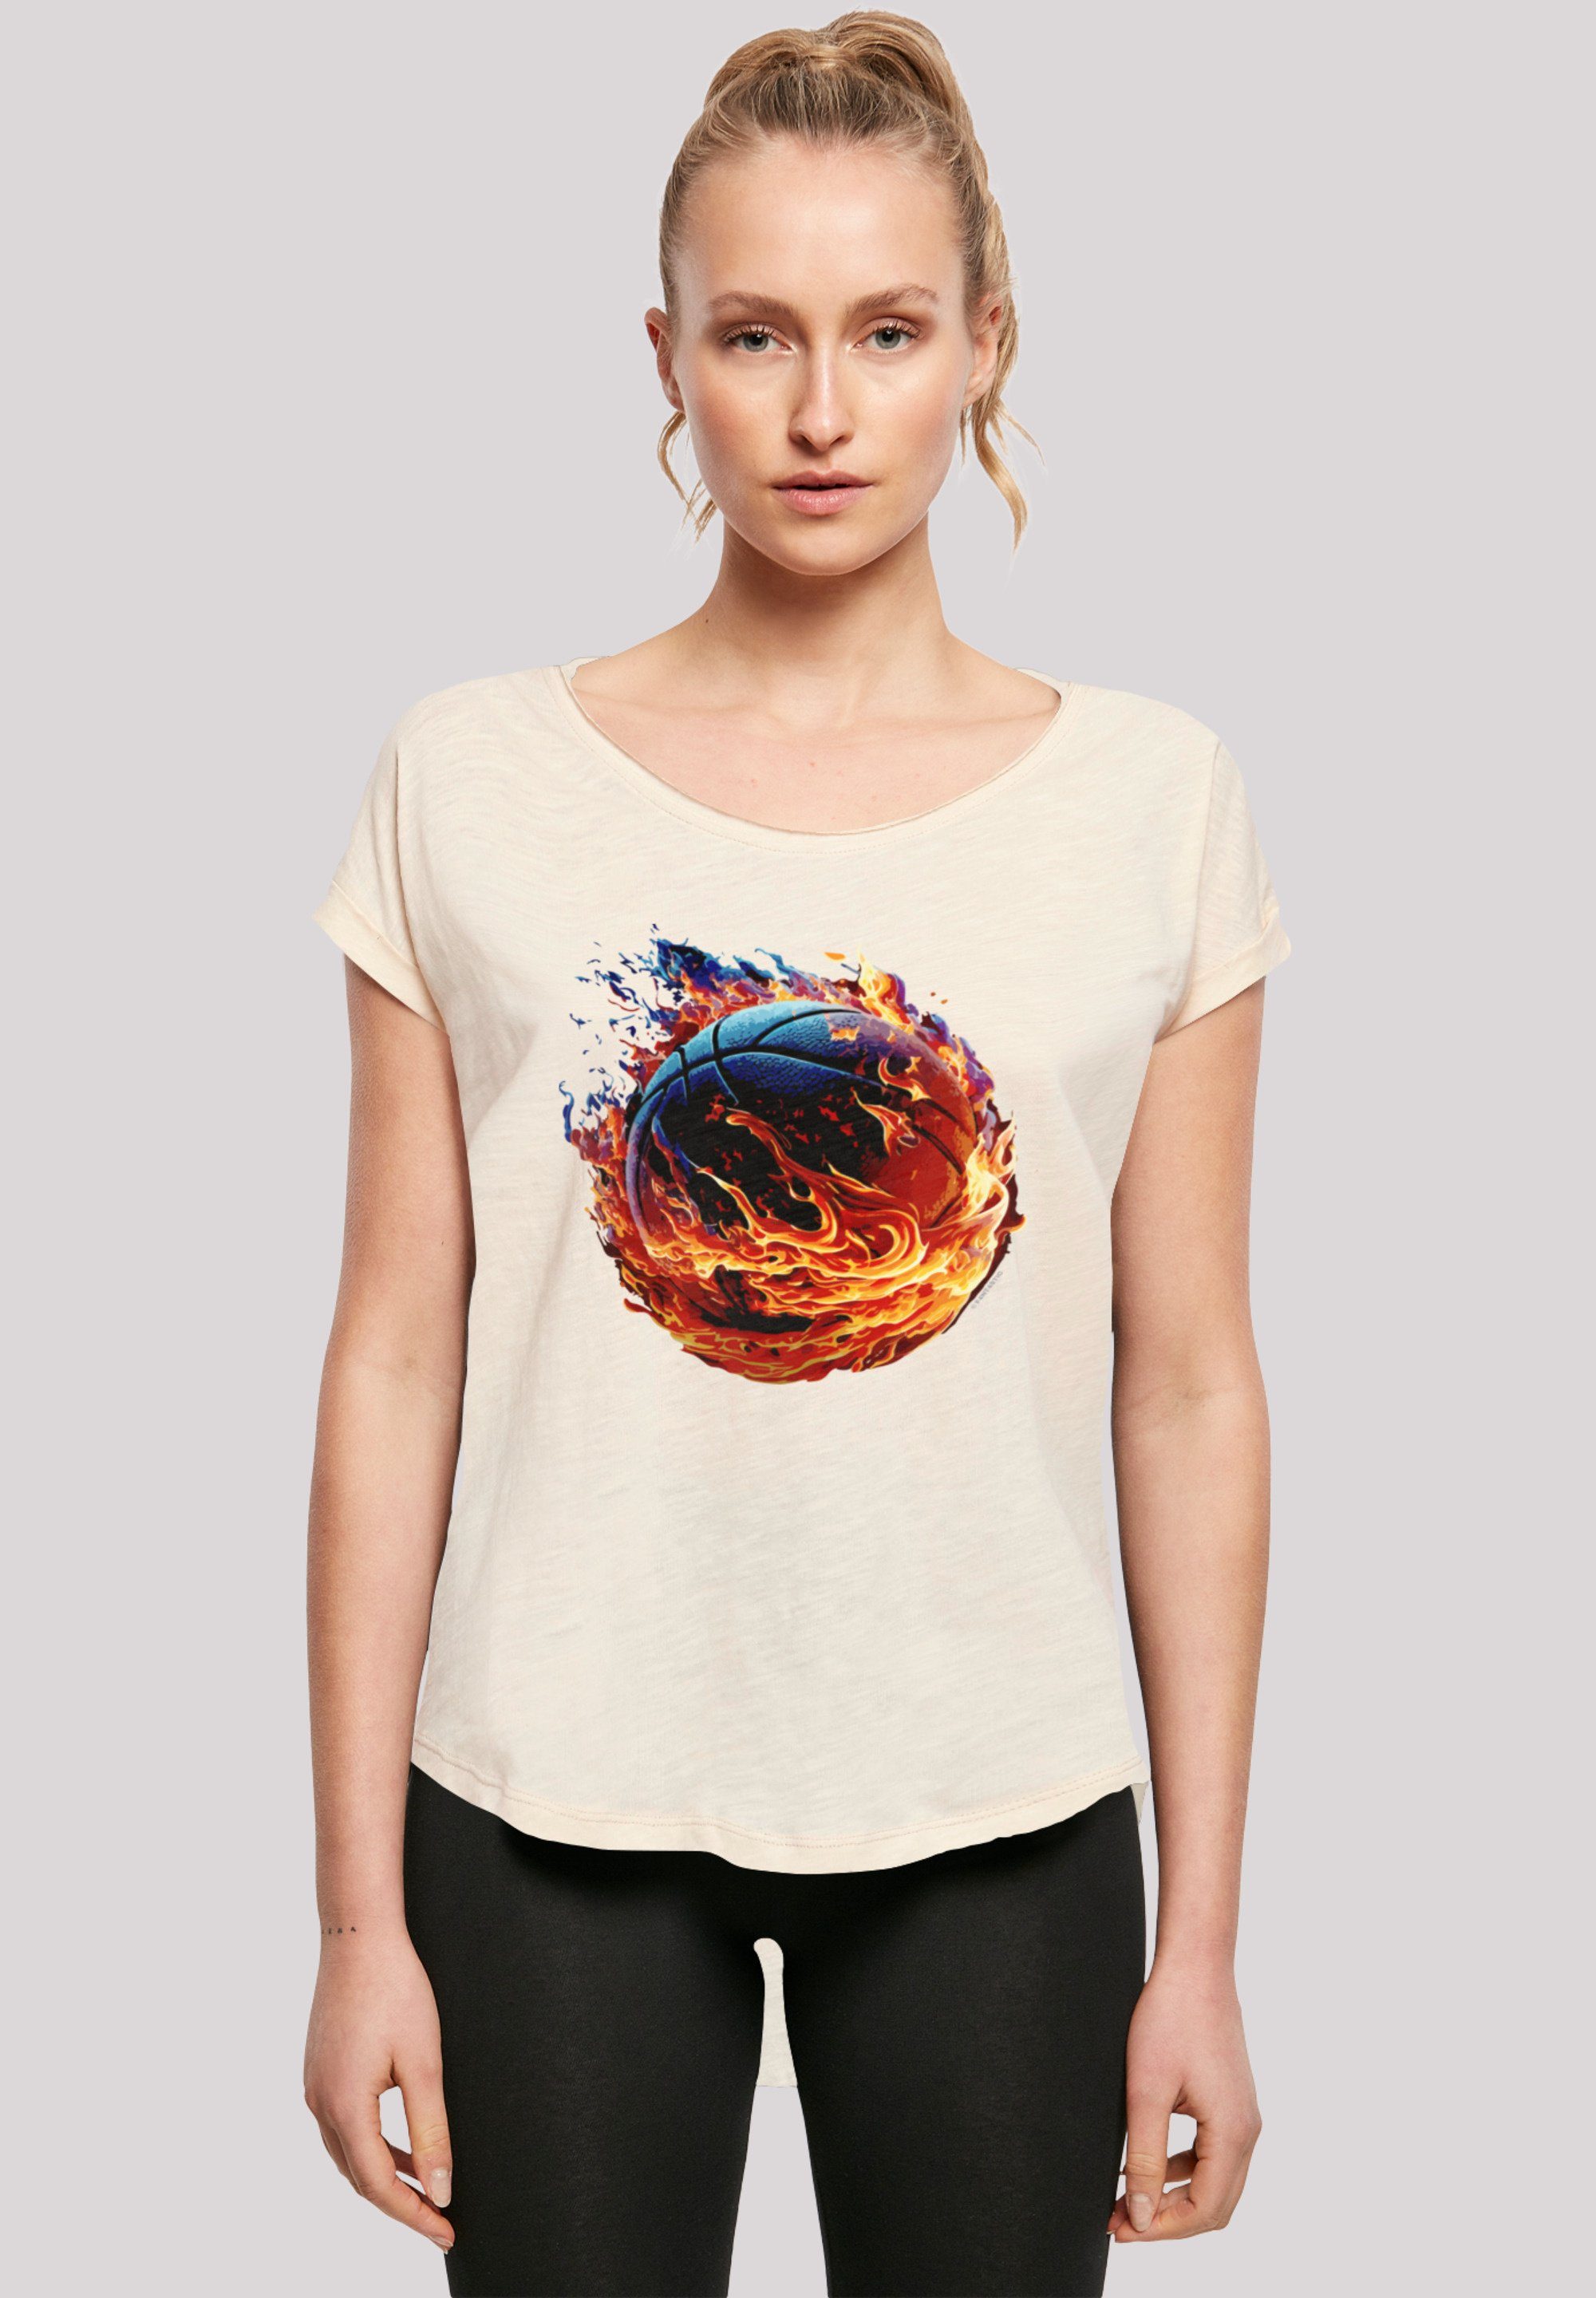 F4NT4STIC T-Shirt Basketball On Fire Sport LONG Print, Sehr weicher  Baumwollstoff mit hohem Tragekomfort | T-Shirts